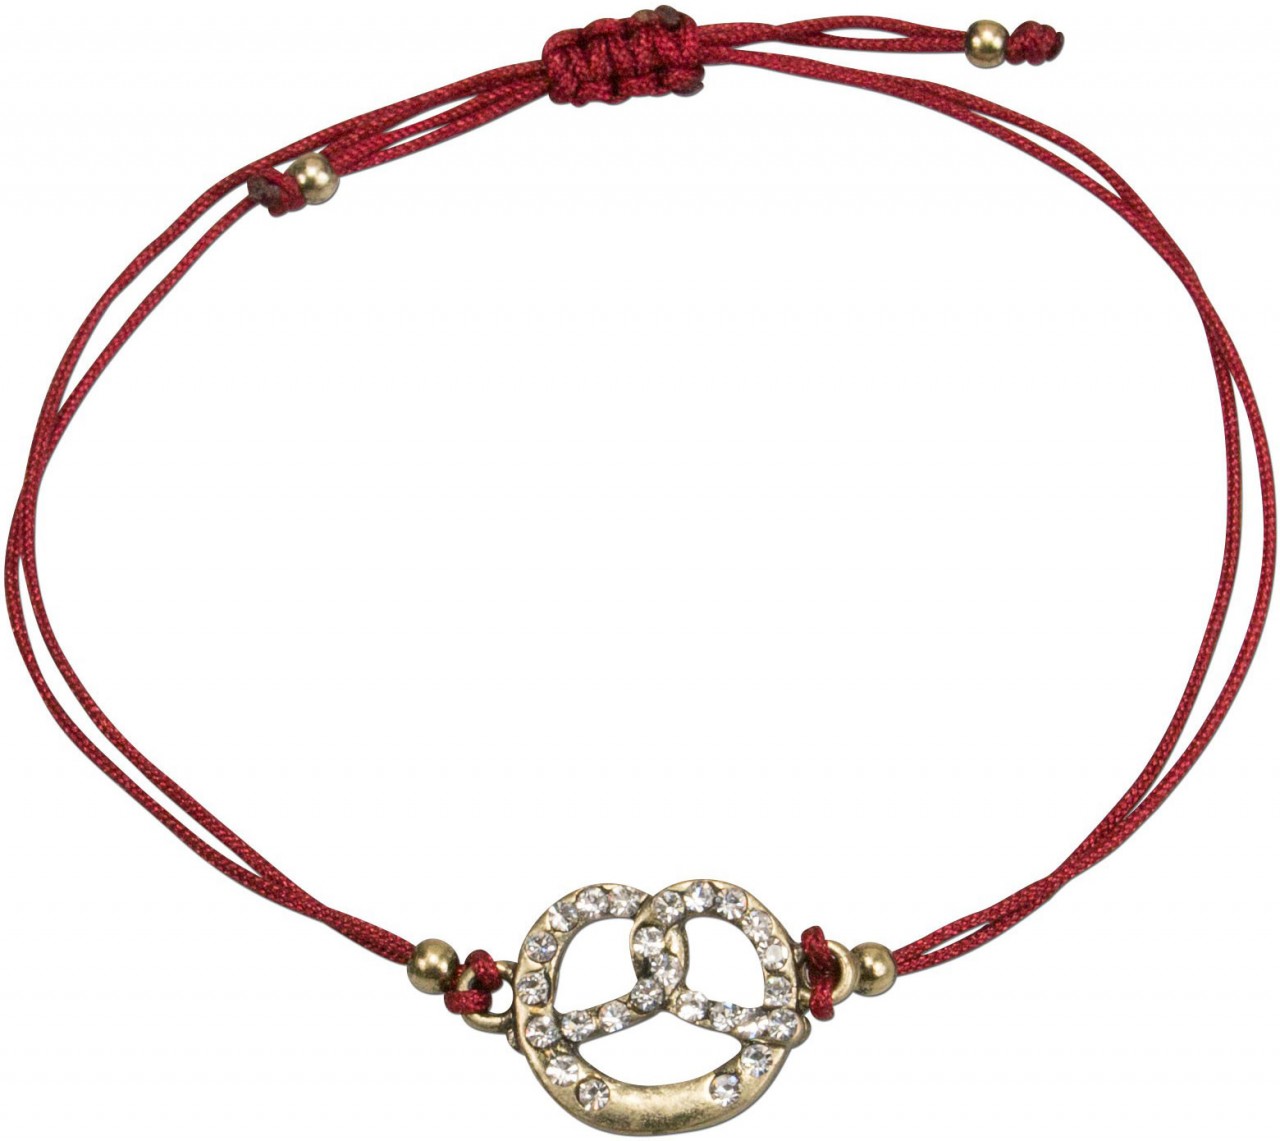 Aperçu: Set de bracelets de Trachten rouge